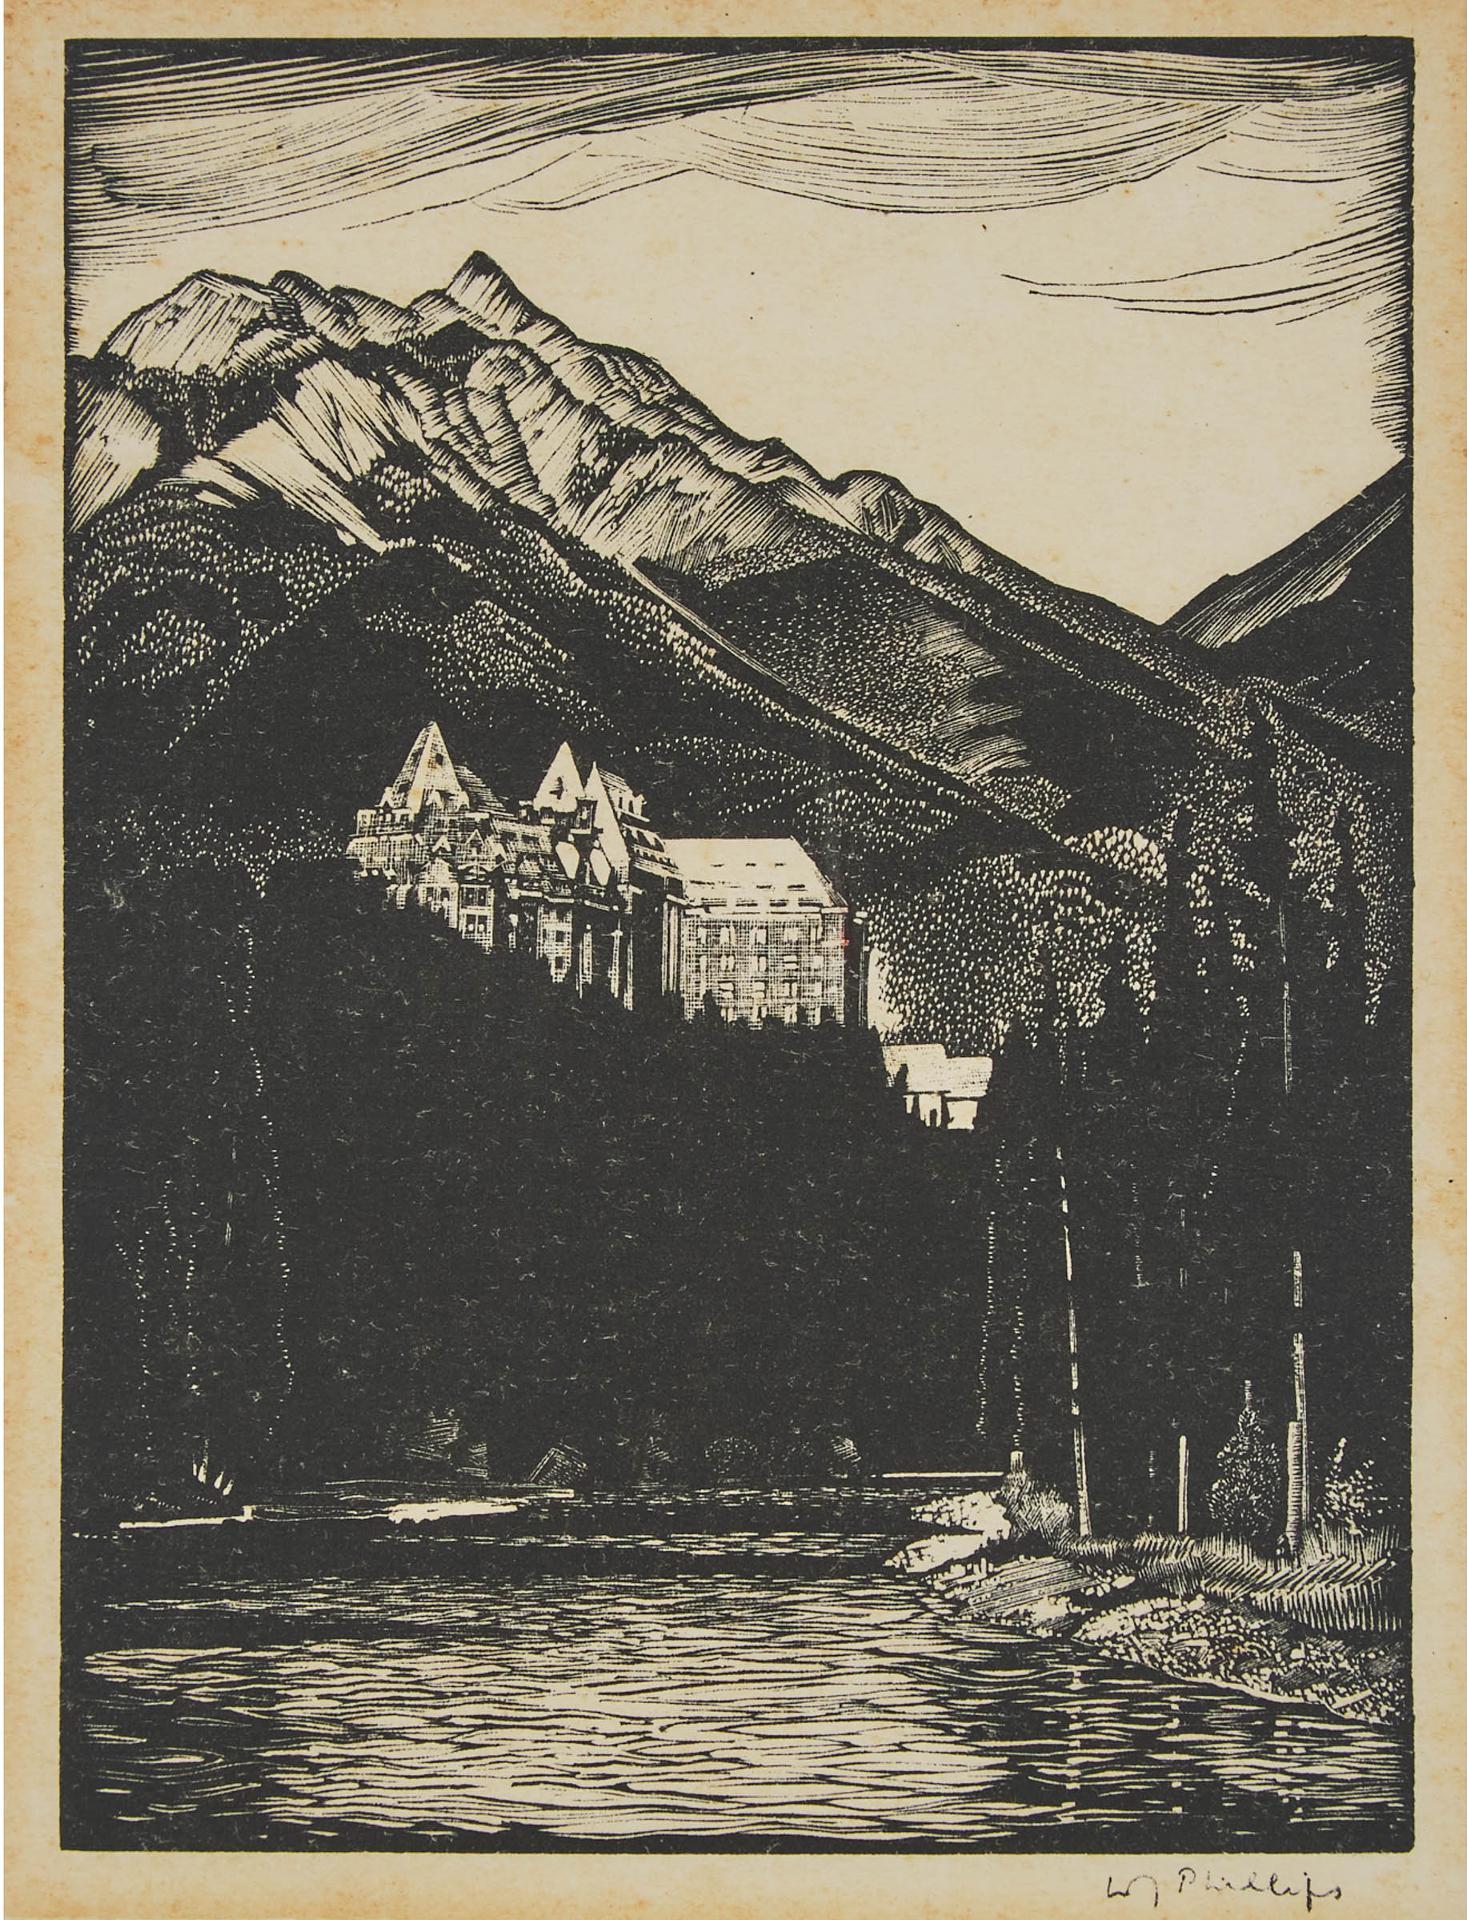 Walter Joseph (W.J.) Phillips (1884-1963) - Banff Springs Hotel, 1934